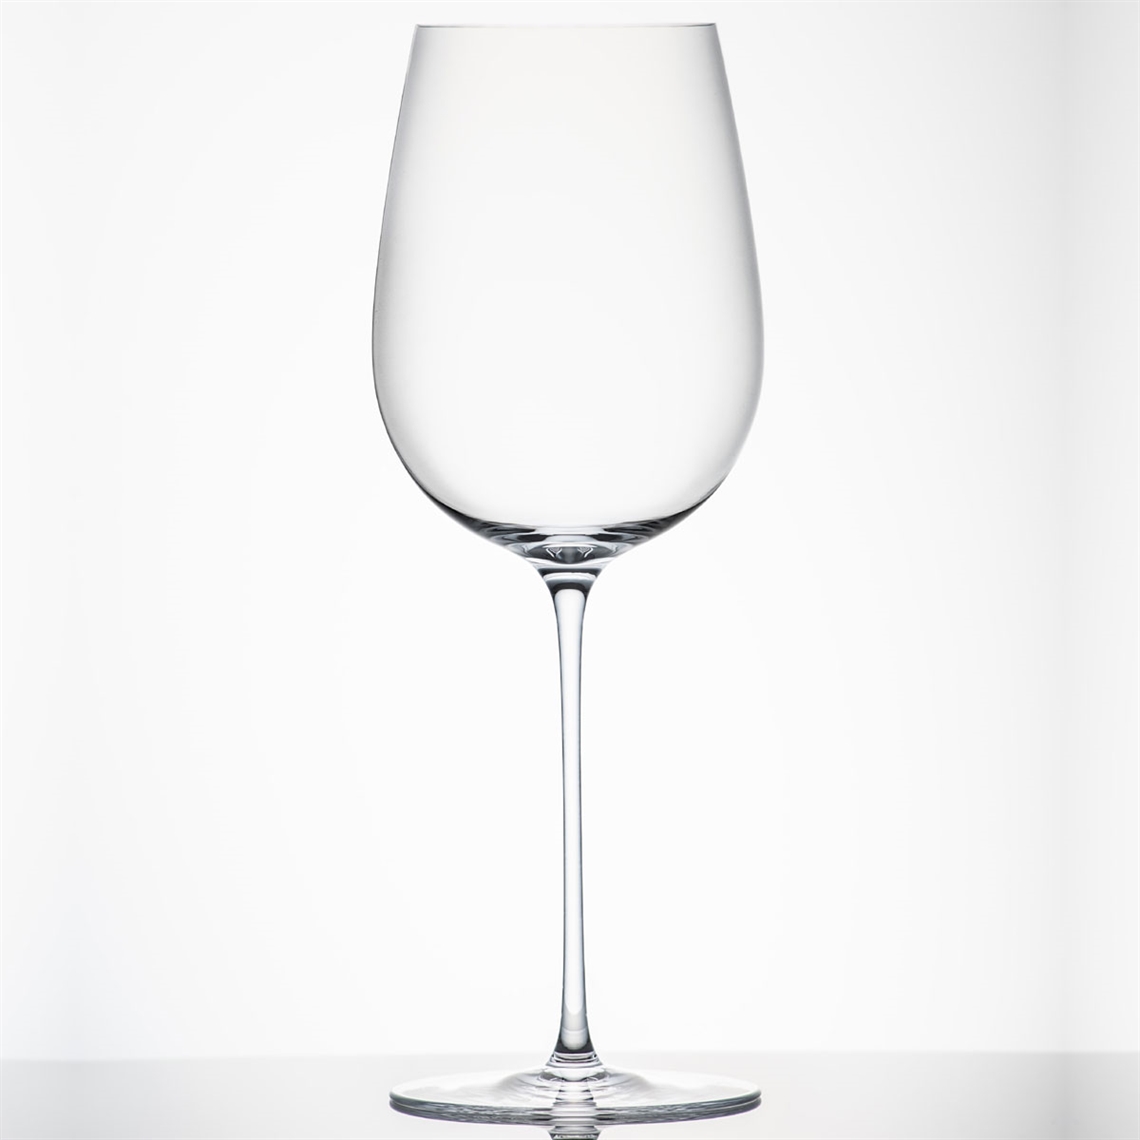 Sydonios Racine Collection - l’Esthète Red Wine Glass - Set of 2